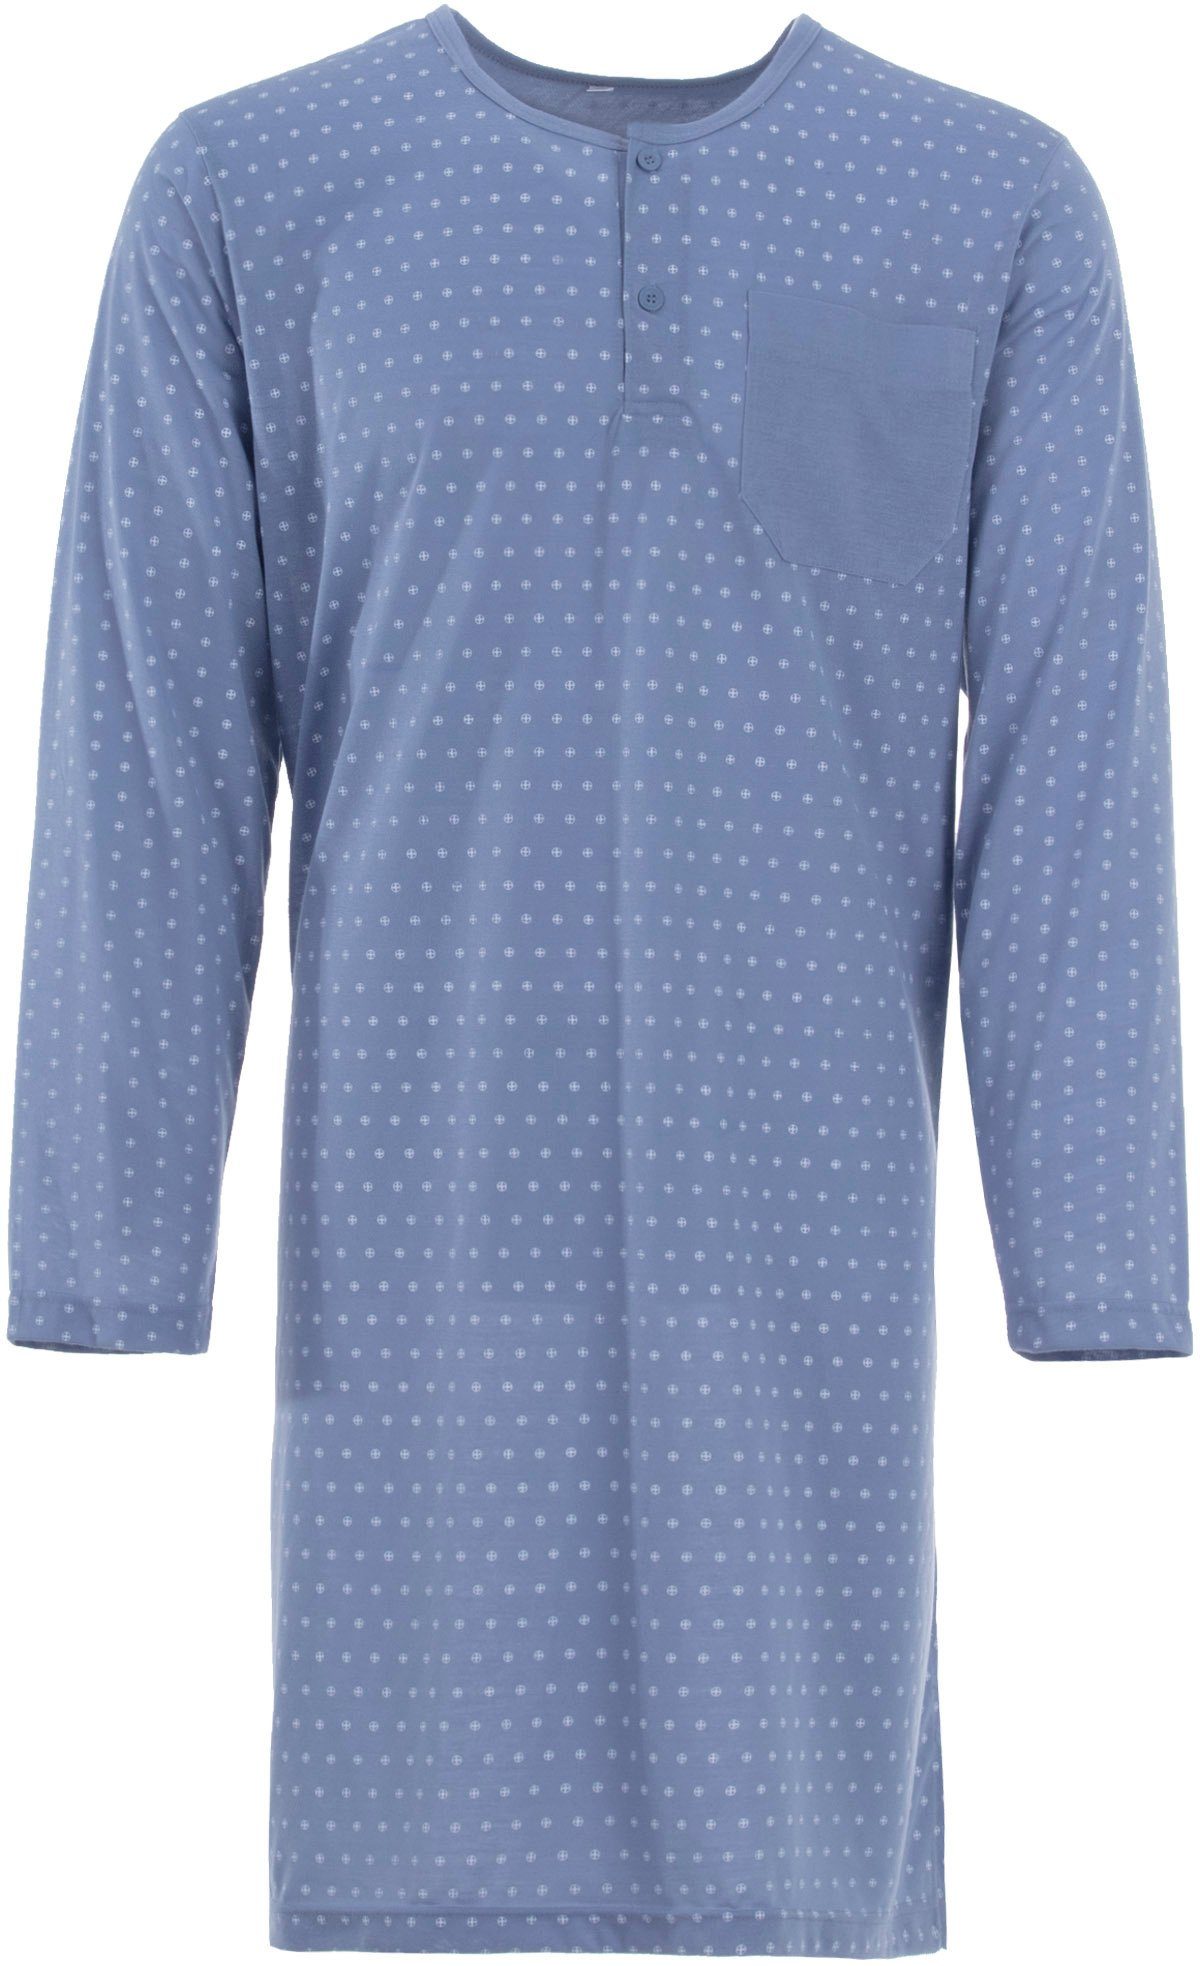 Ball Langarm - graublau Henry Nachthemd Terre Nachthemd